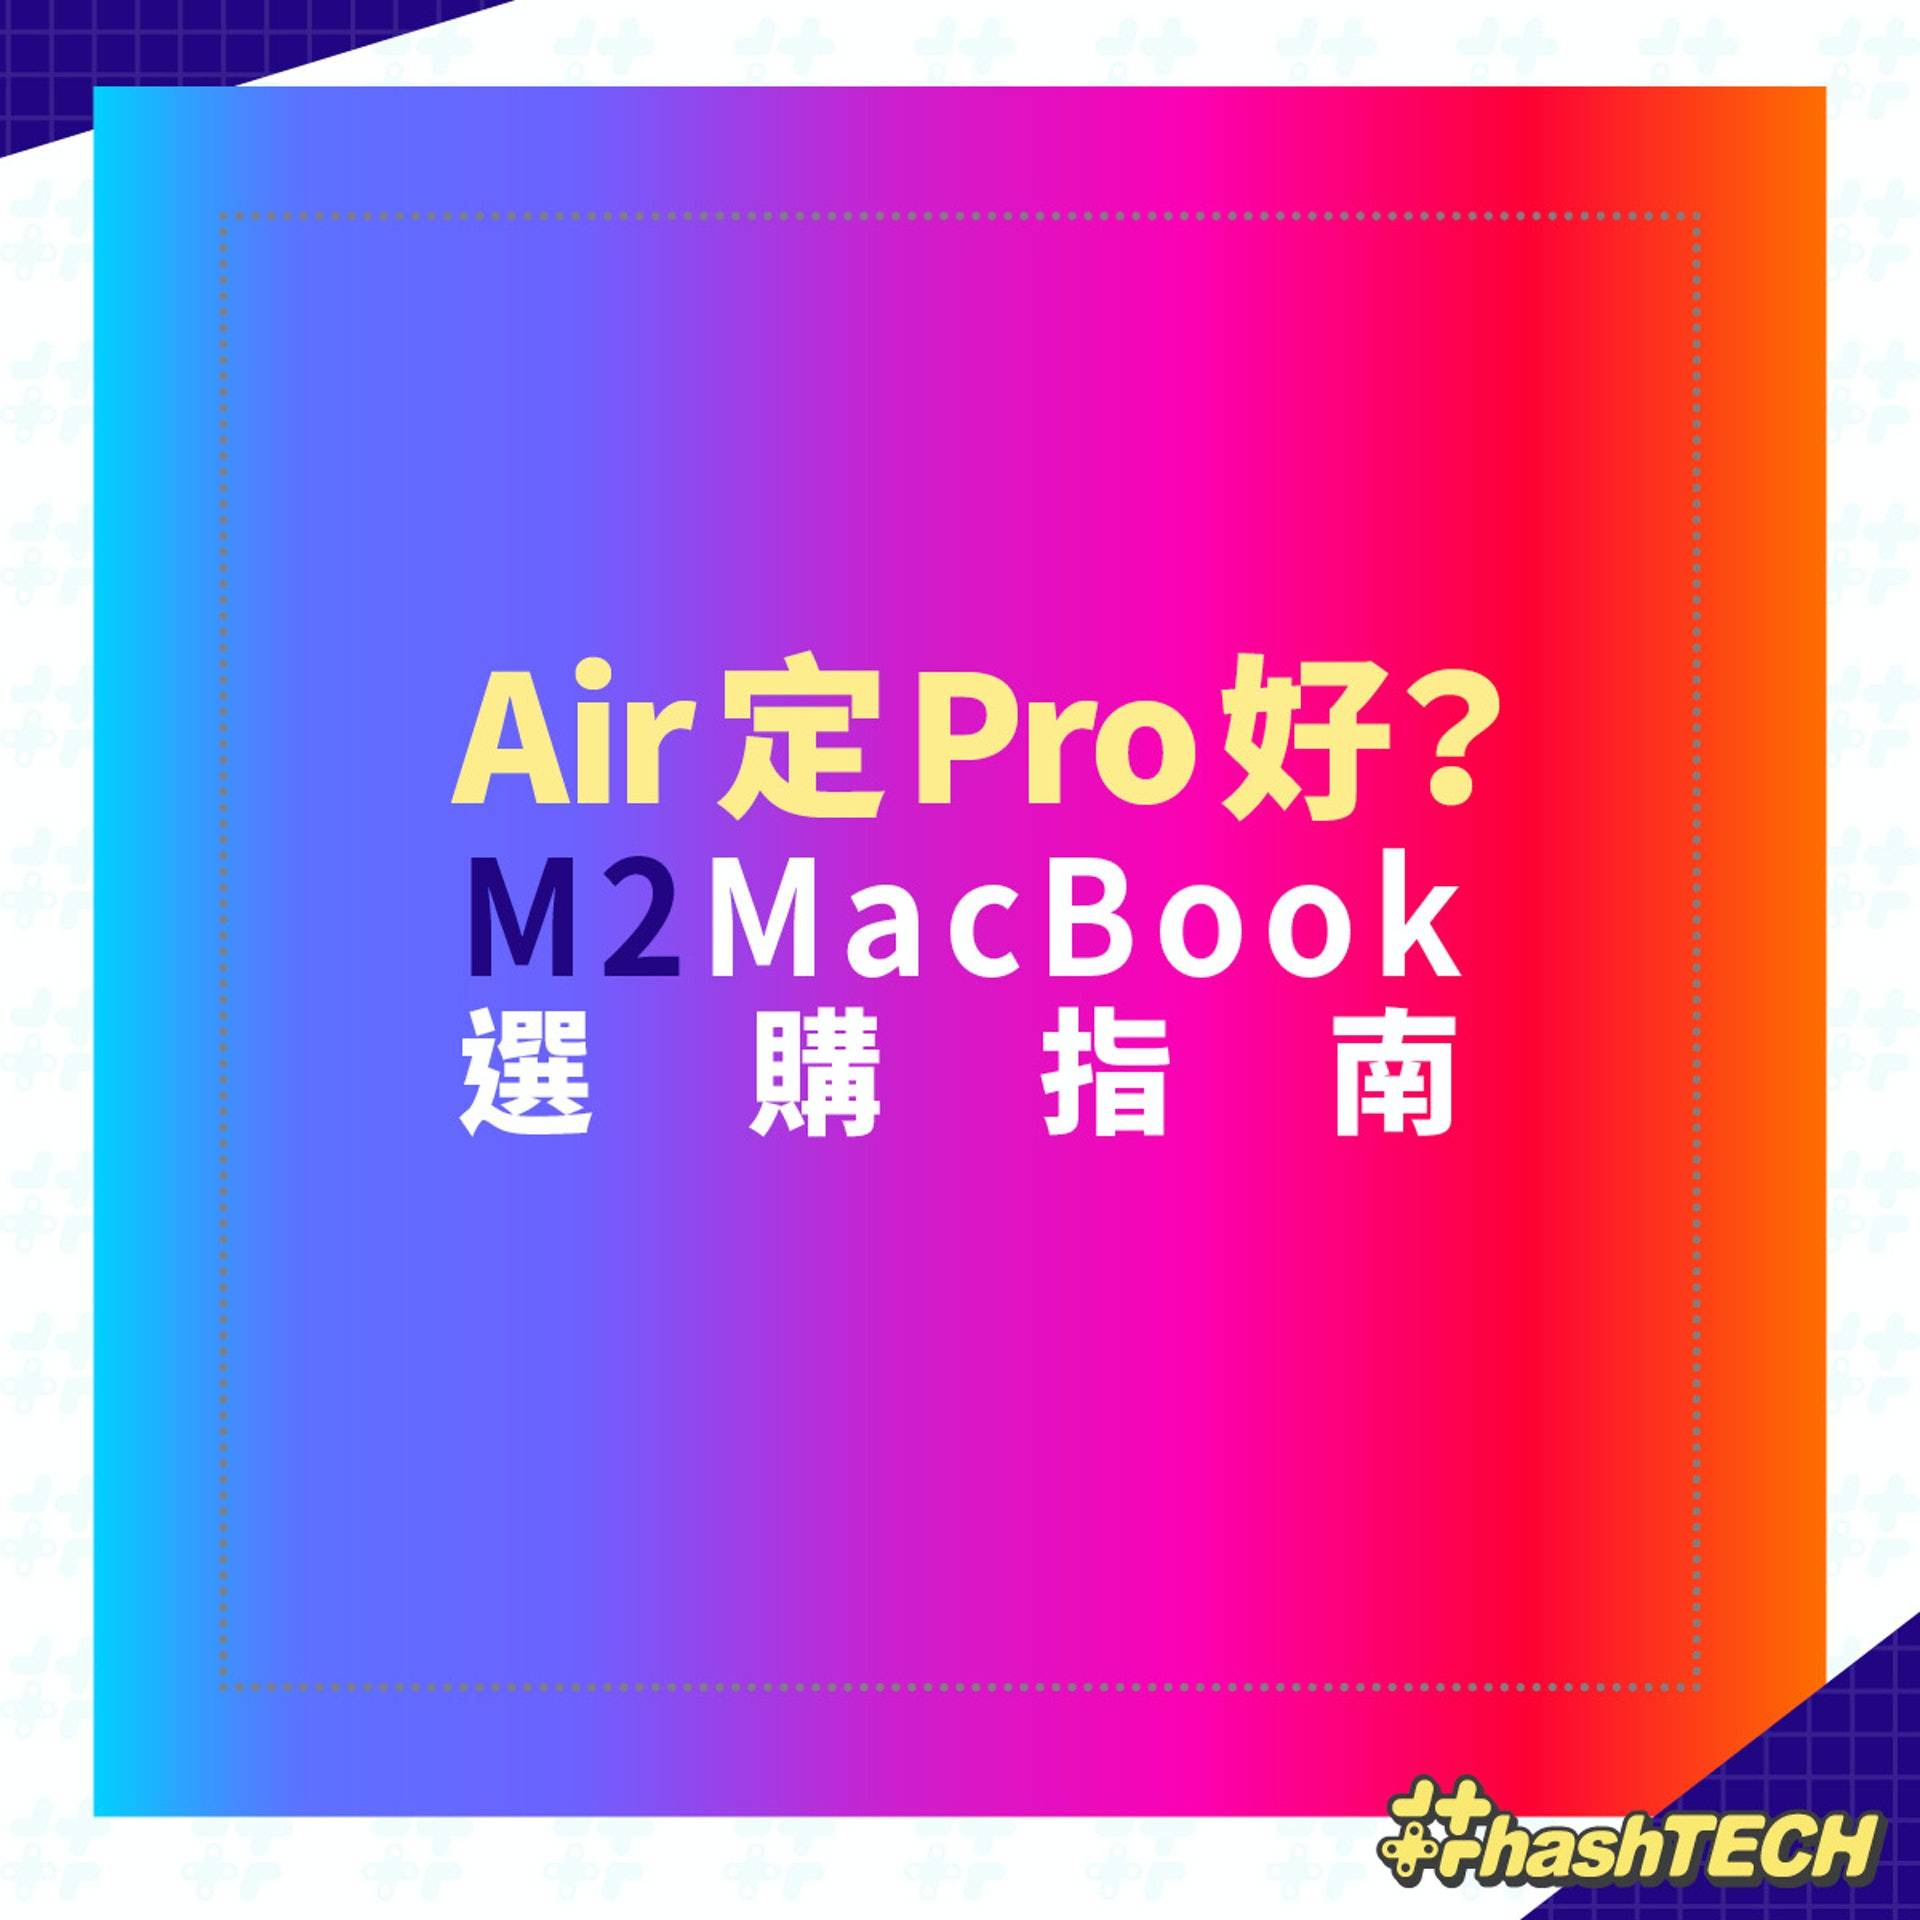 M2 MacBook Air / M2 MacBook Pro 选购指南